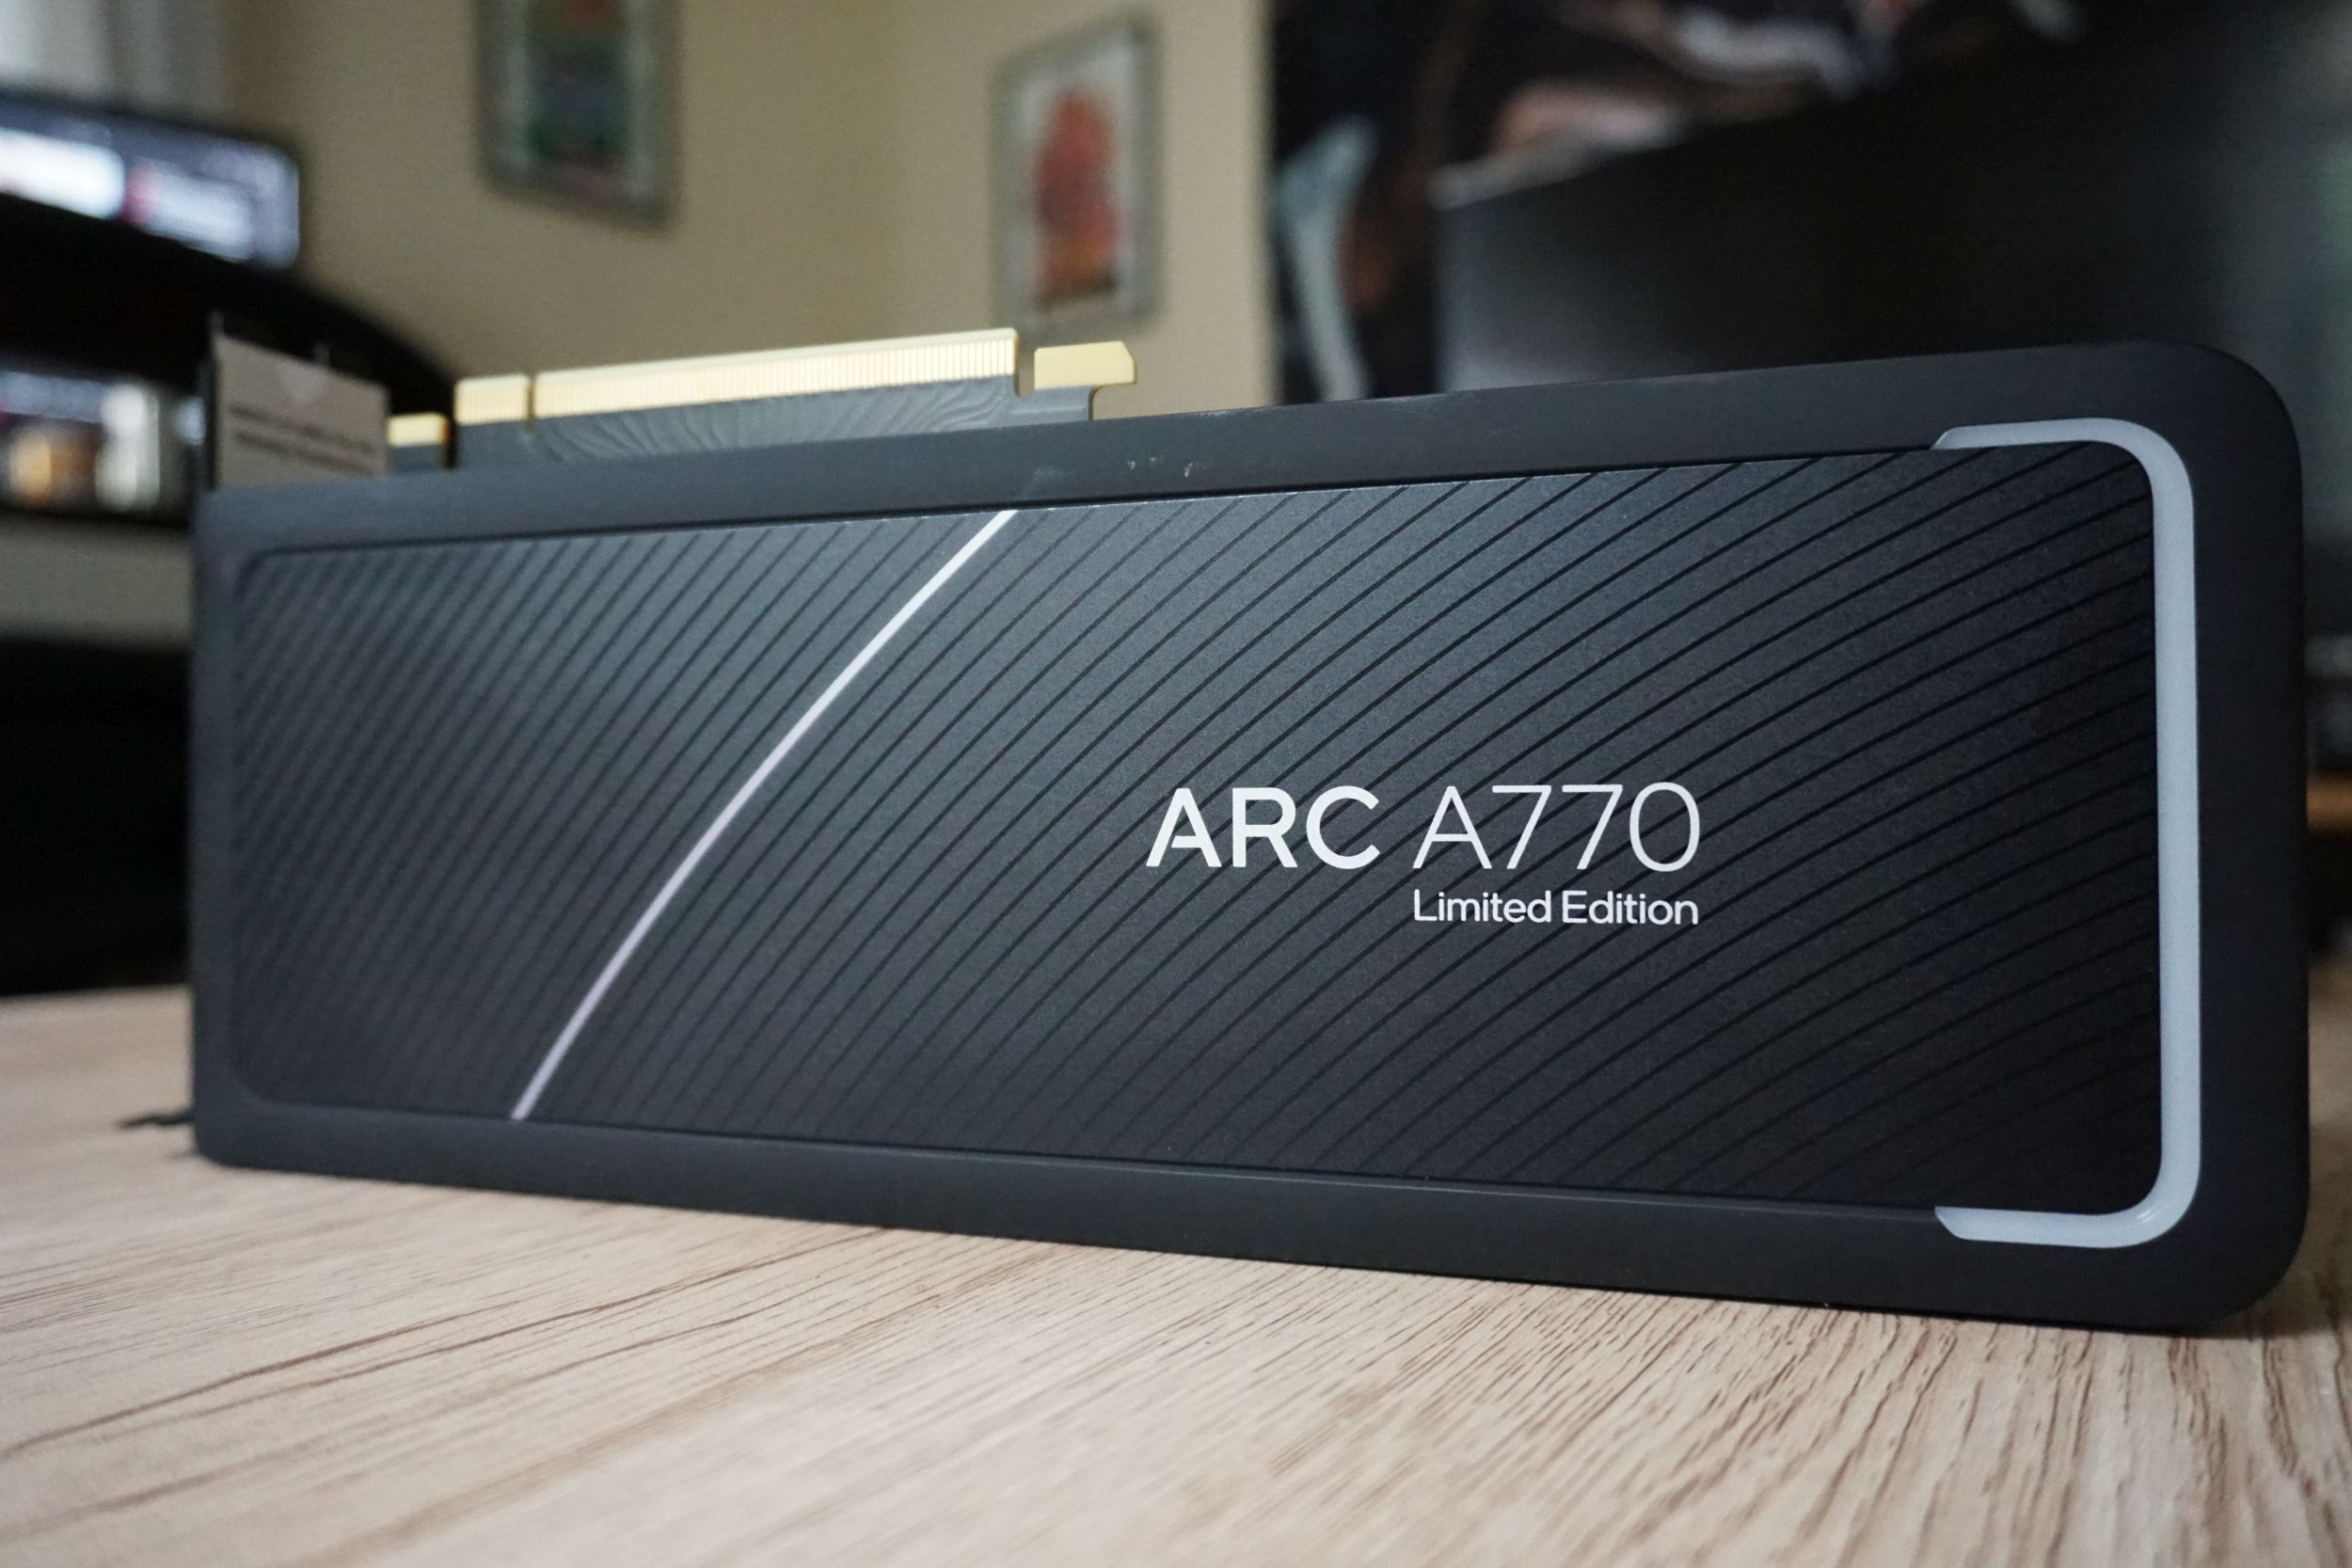 Arc A770 Limited Edition